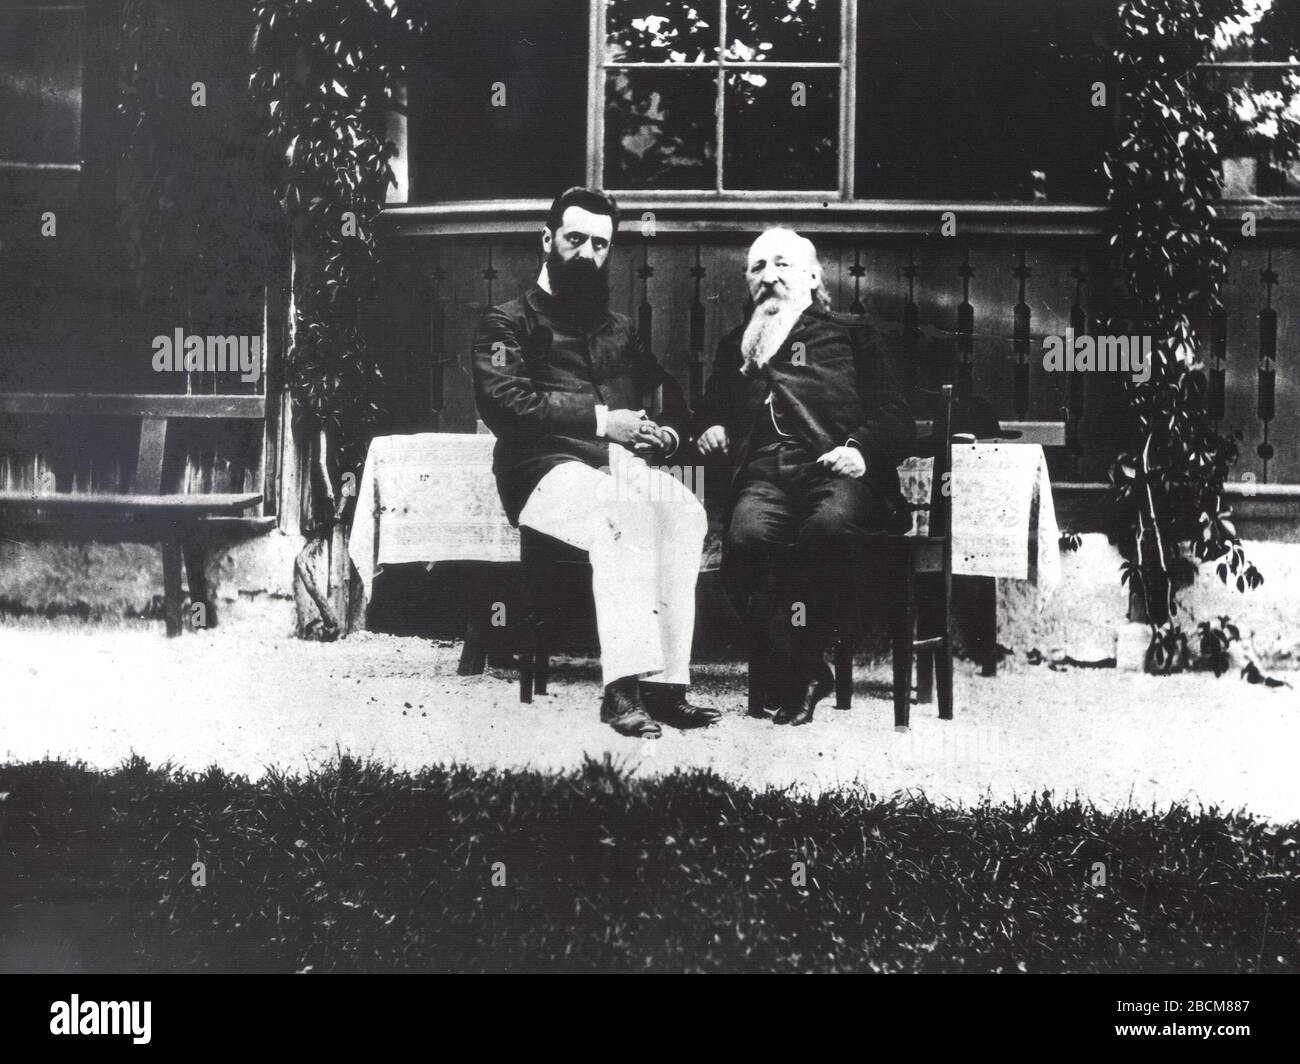 English Theodor Herzl L With Max Mandelstam One Of The Leaders Of Russian Zionists In Alte Oseza Austria In 1903 E I I I I U U U O U I U C O U E O I U E C O I O I O U E I